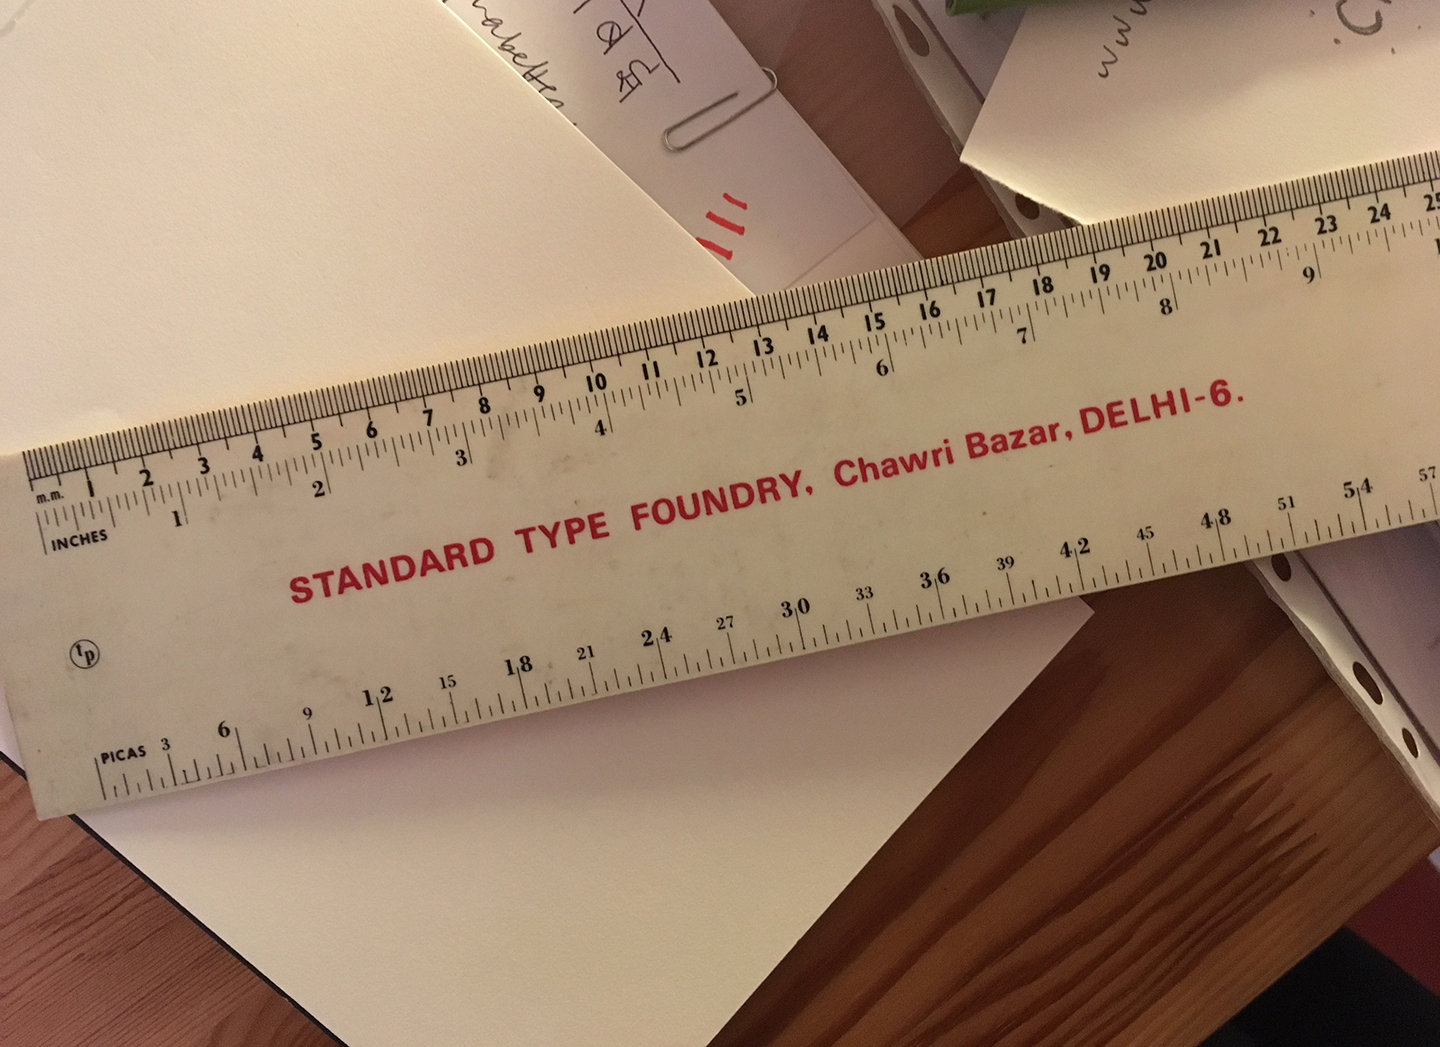 Remember December: Standard Type Foundry – 03/12/17